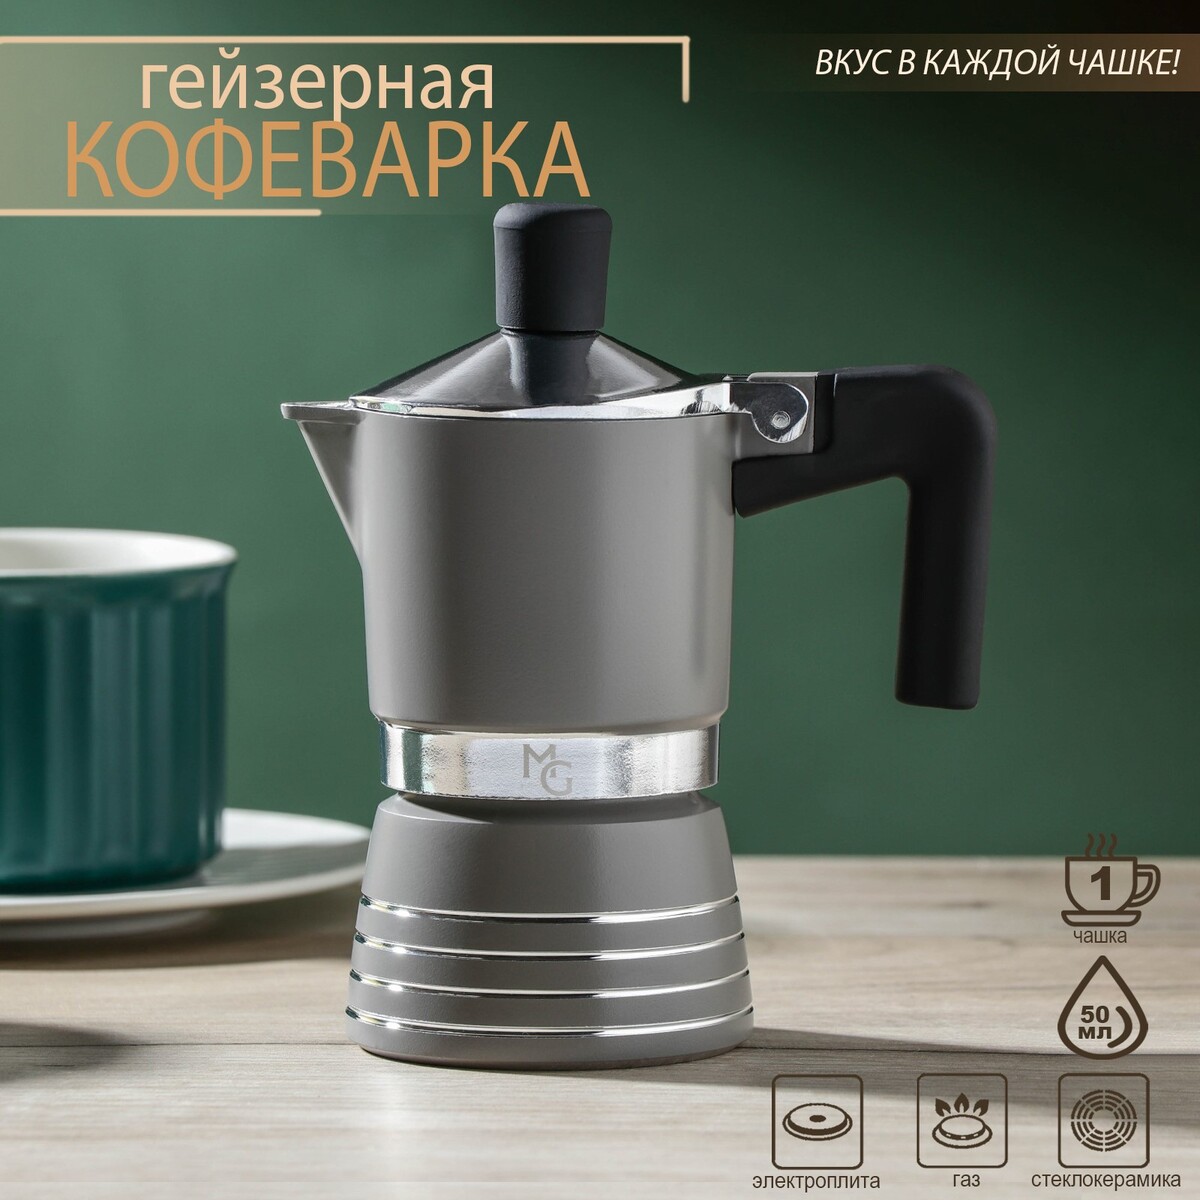 Кофеварка гейзерная magistro moka, на 1 чашку, 50 мл самовар и кофеварка